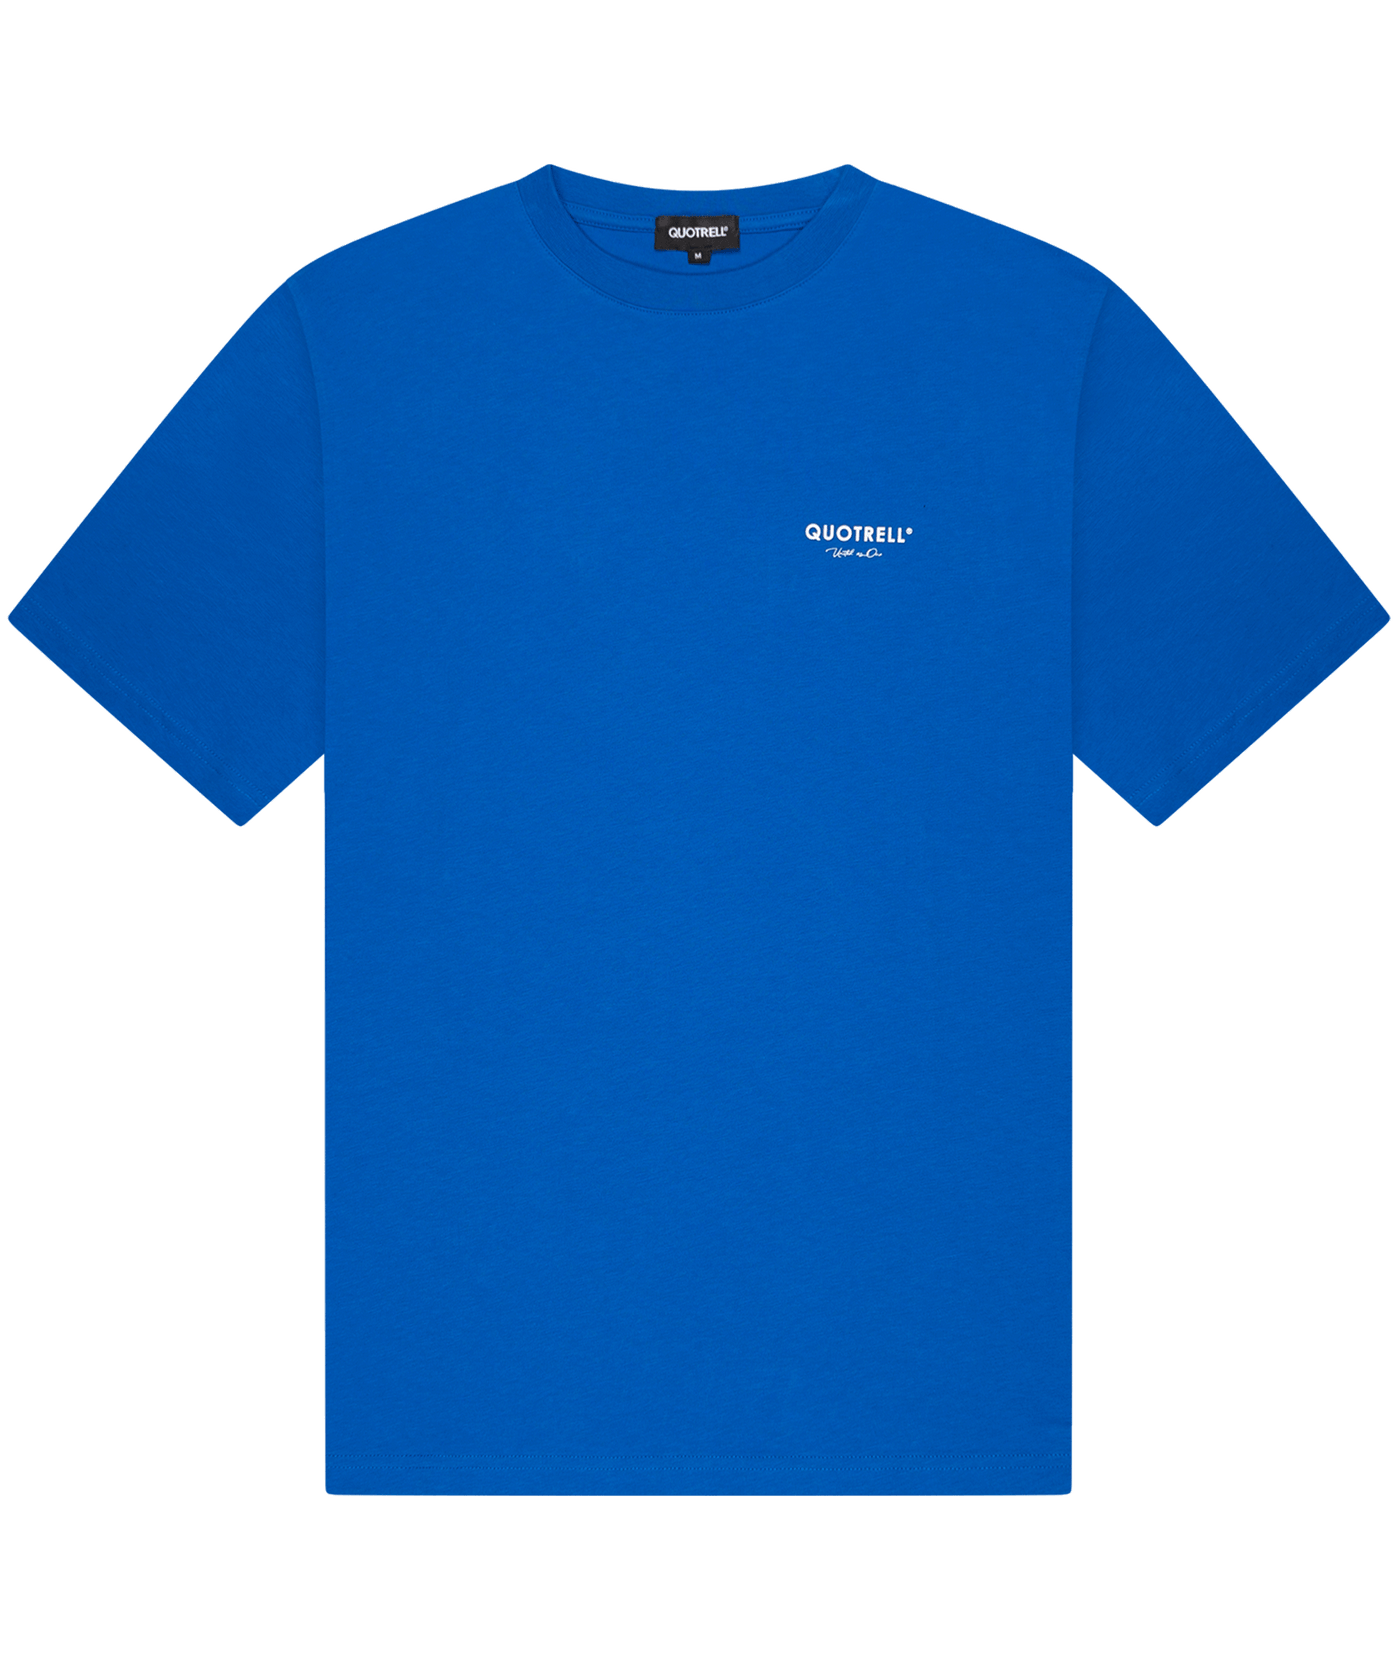 Quotrell - Jaipur - T-shirt - Cobalt/white